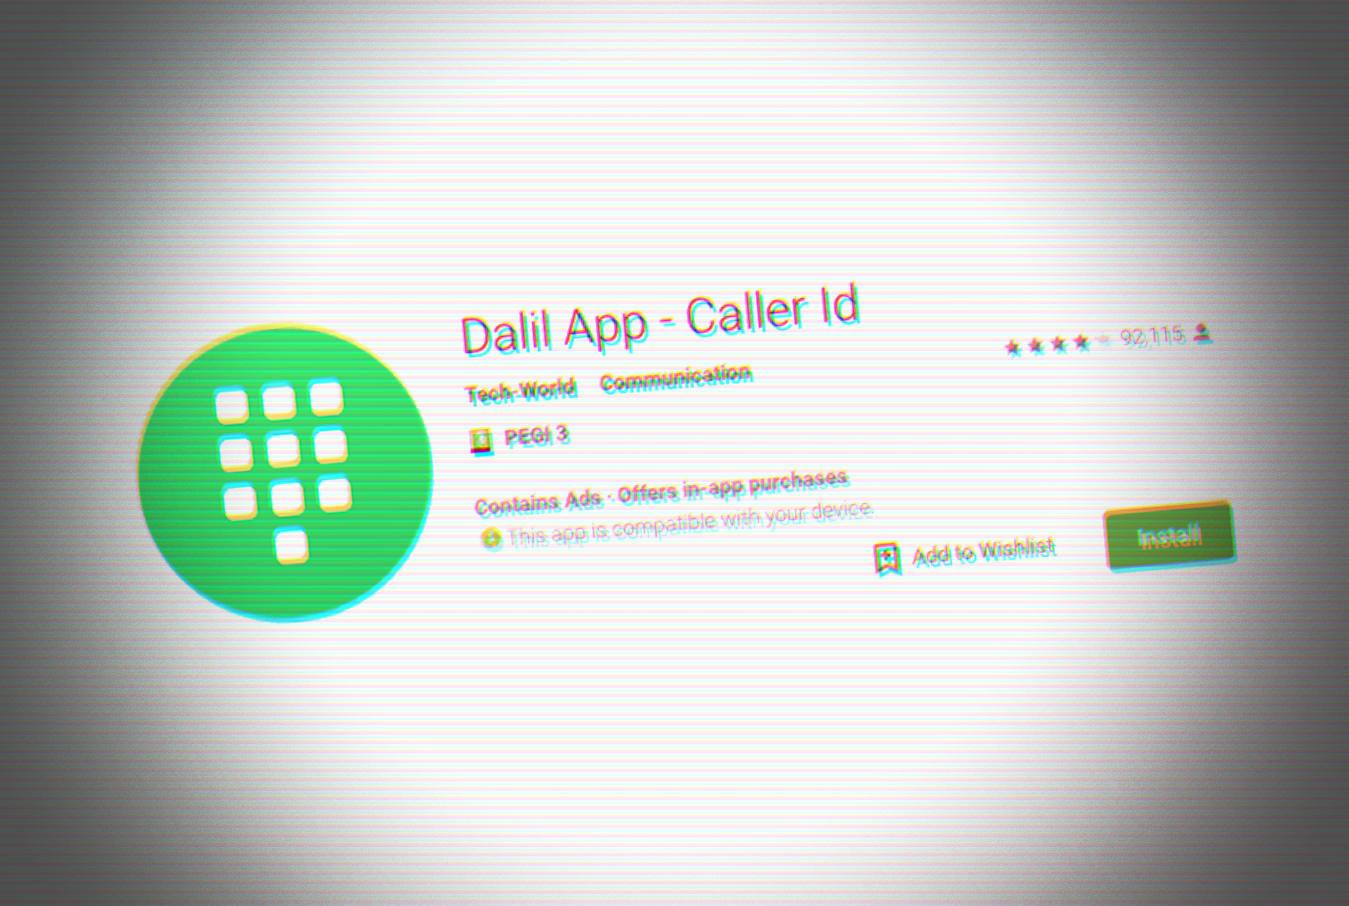 Saudi caller ID app Dalil leaked data of over 5 Million users